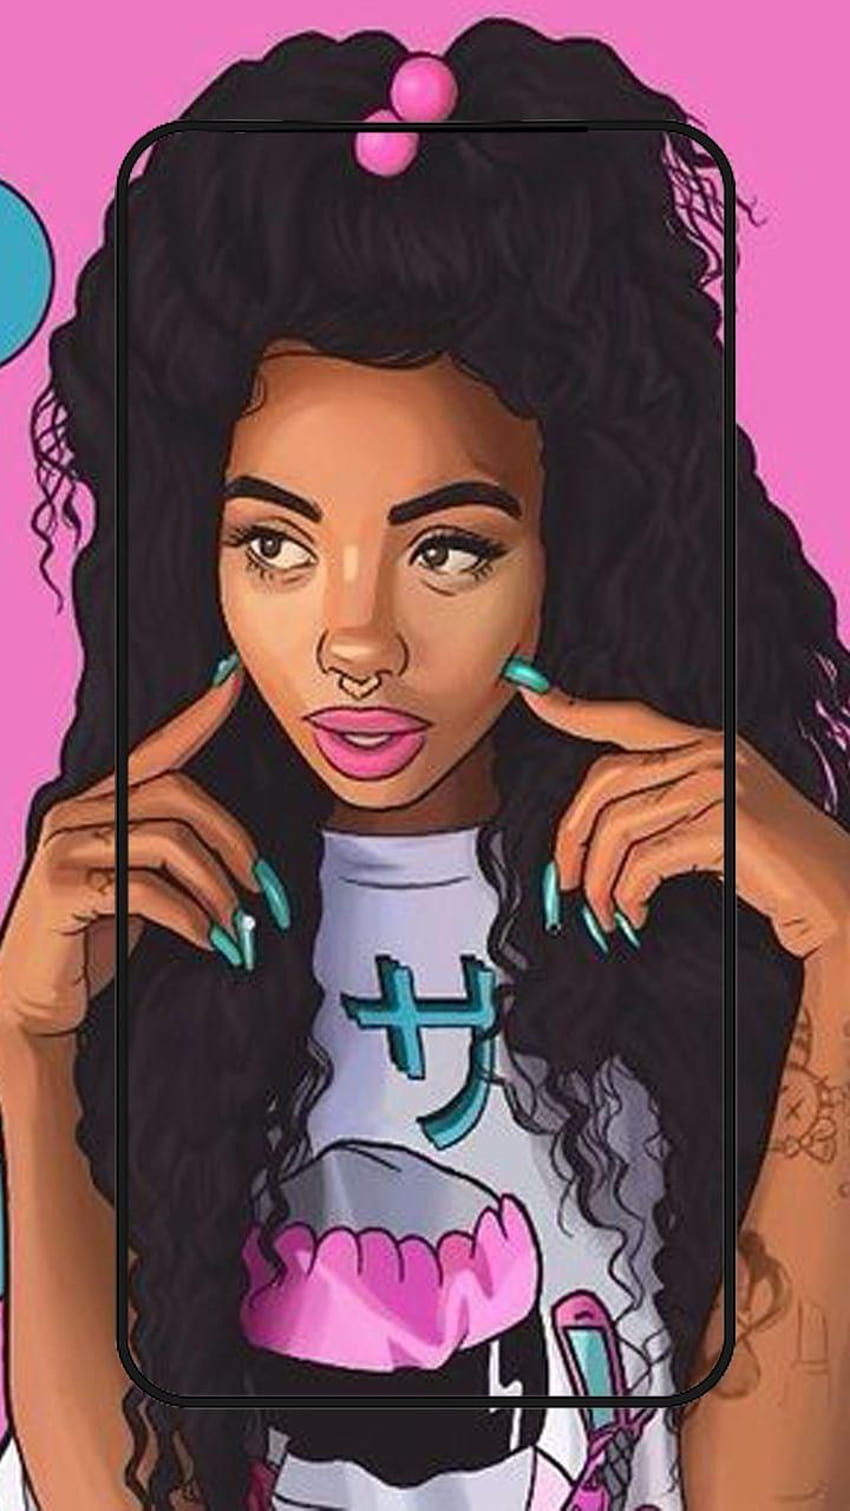 Gadis lucu di tahun 2021, kartun gadis kulit hitam cantik wallpaper ponsel HD